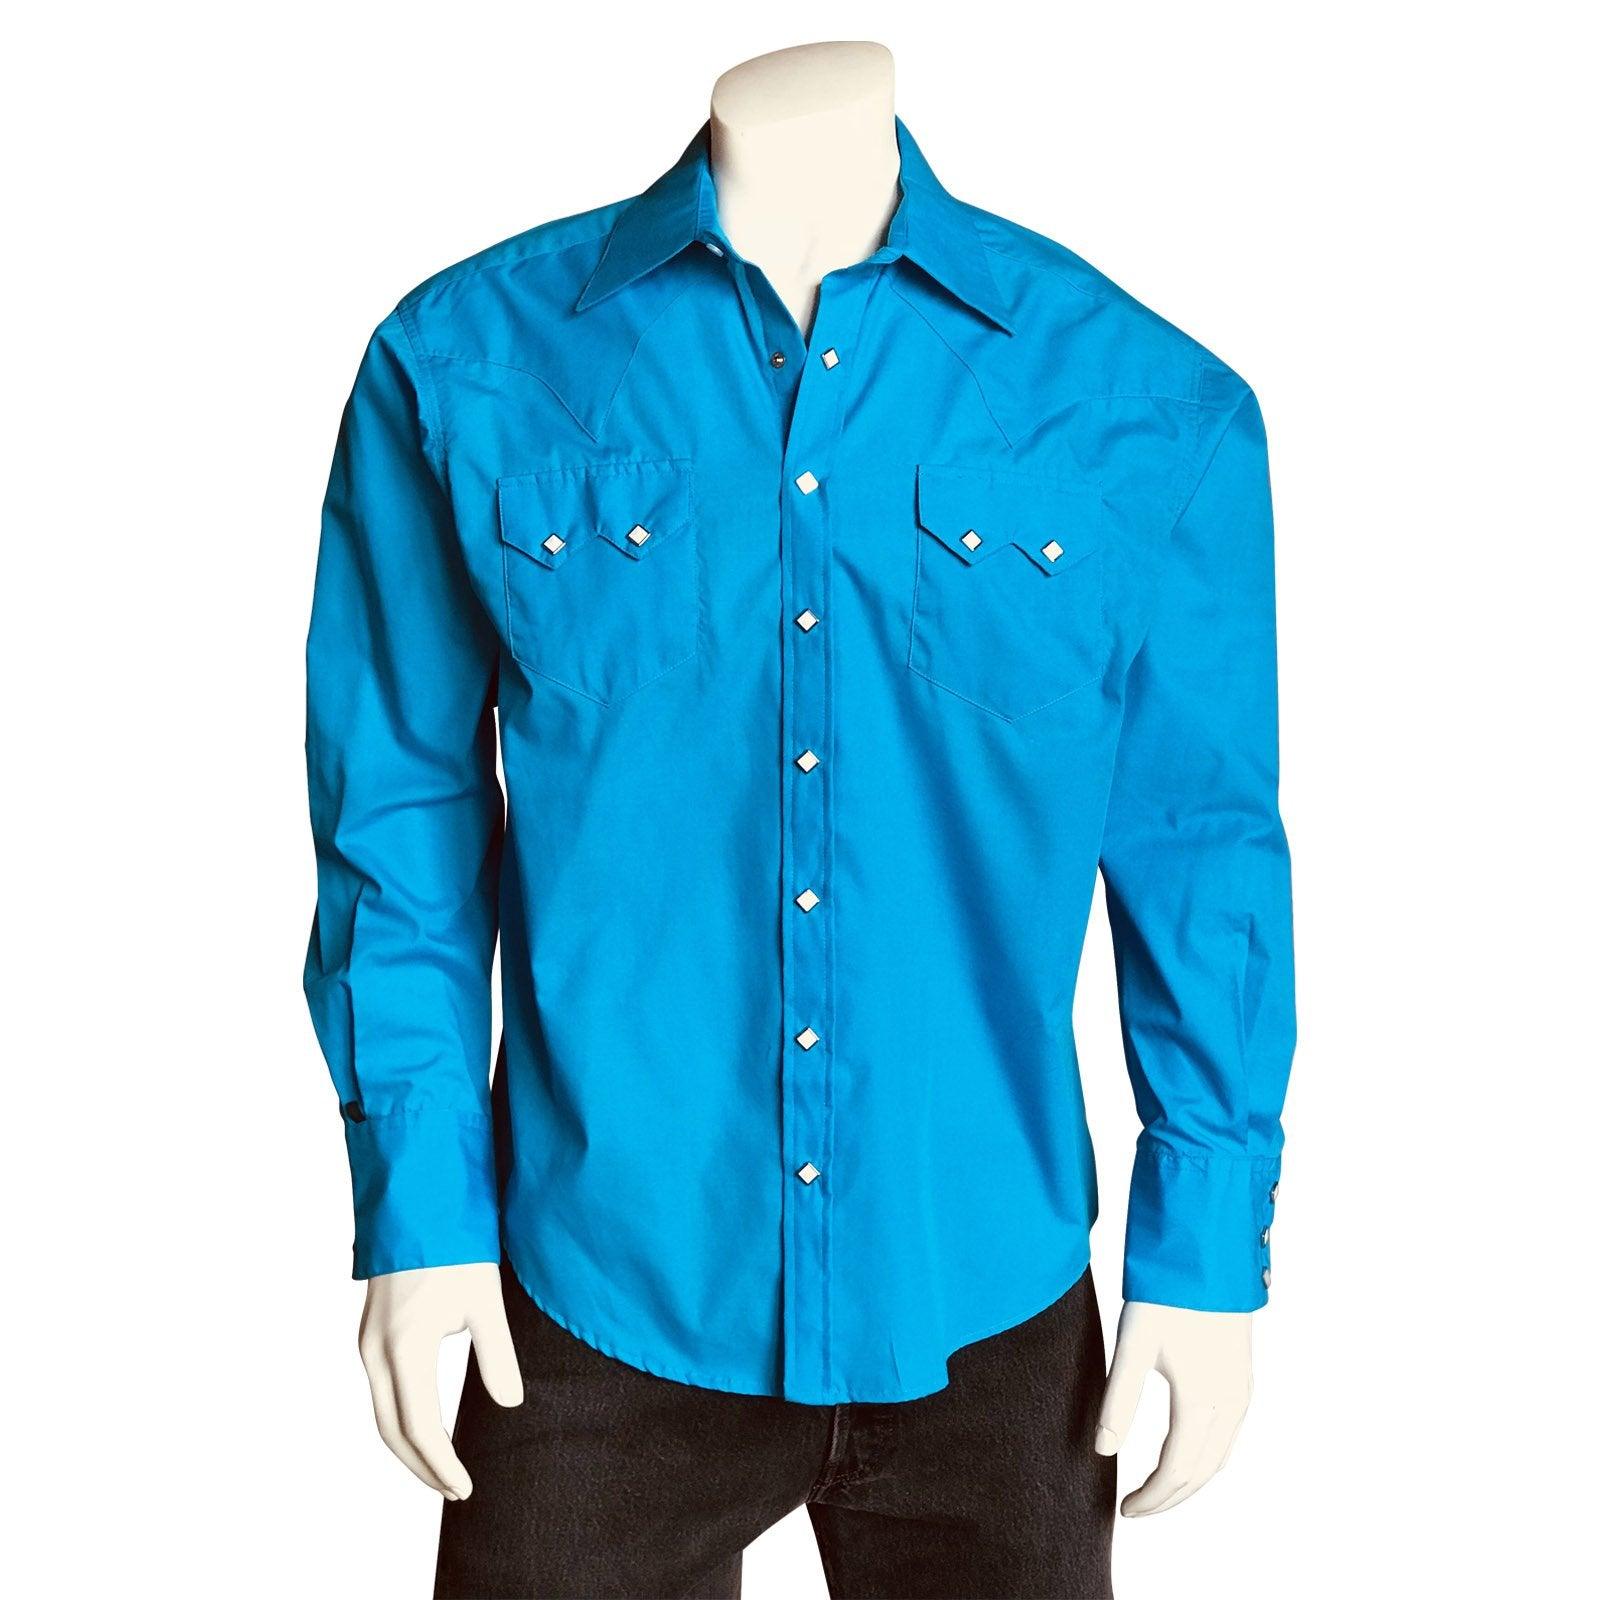 Men's Slim Fit Turquoise Cotton Blend Western Shirt - Flyclothing LLC